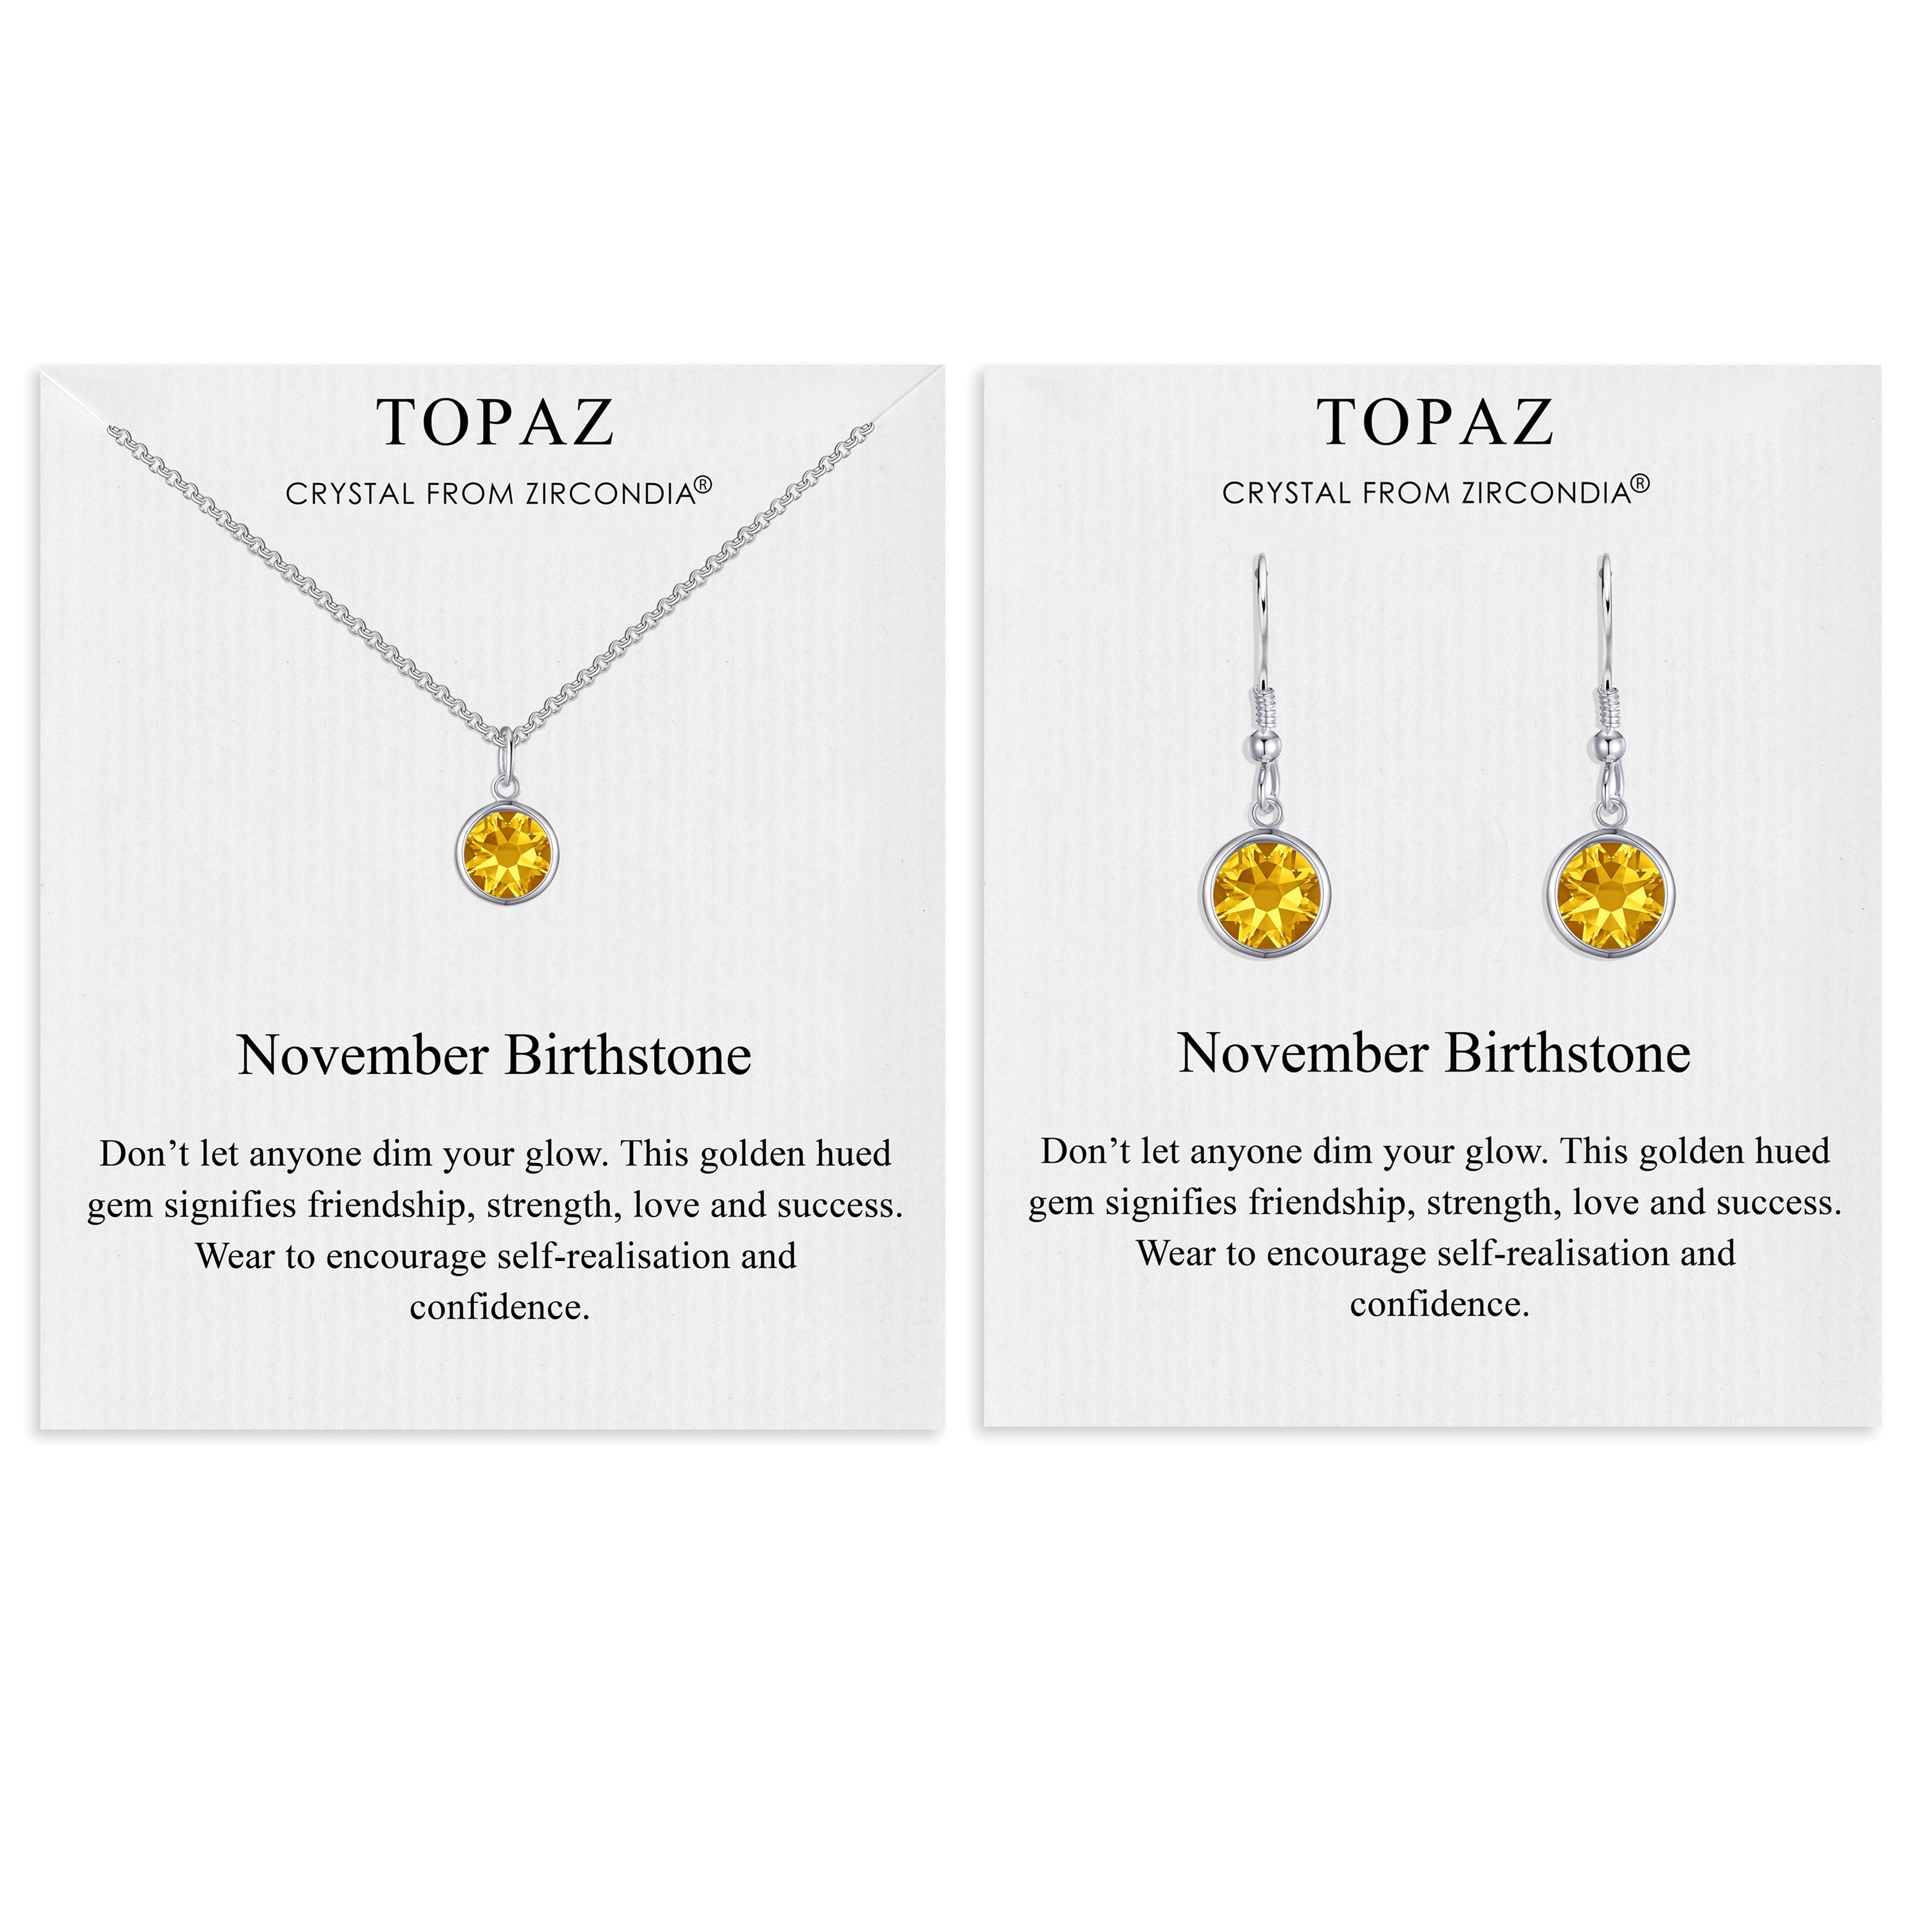 November (Topaz) Birthstone Necklace & Drop Earrings Set Created with Zircondia® Crystals by Philip Jones Jewellery